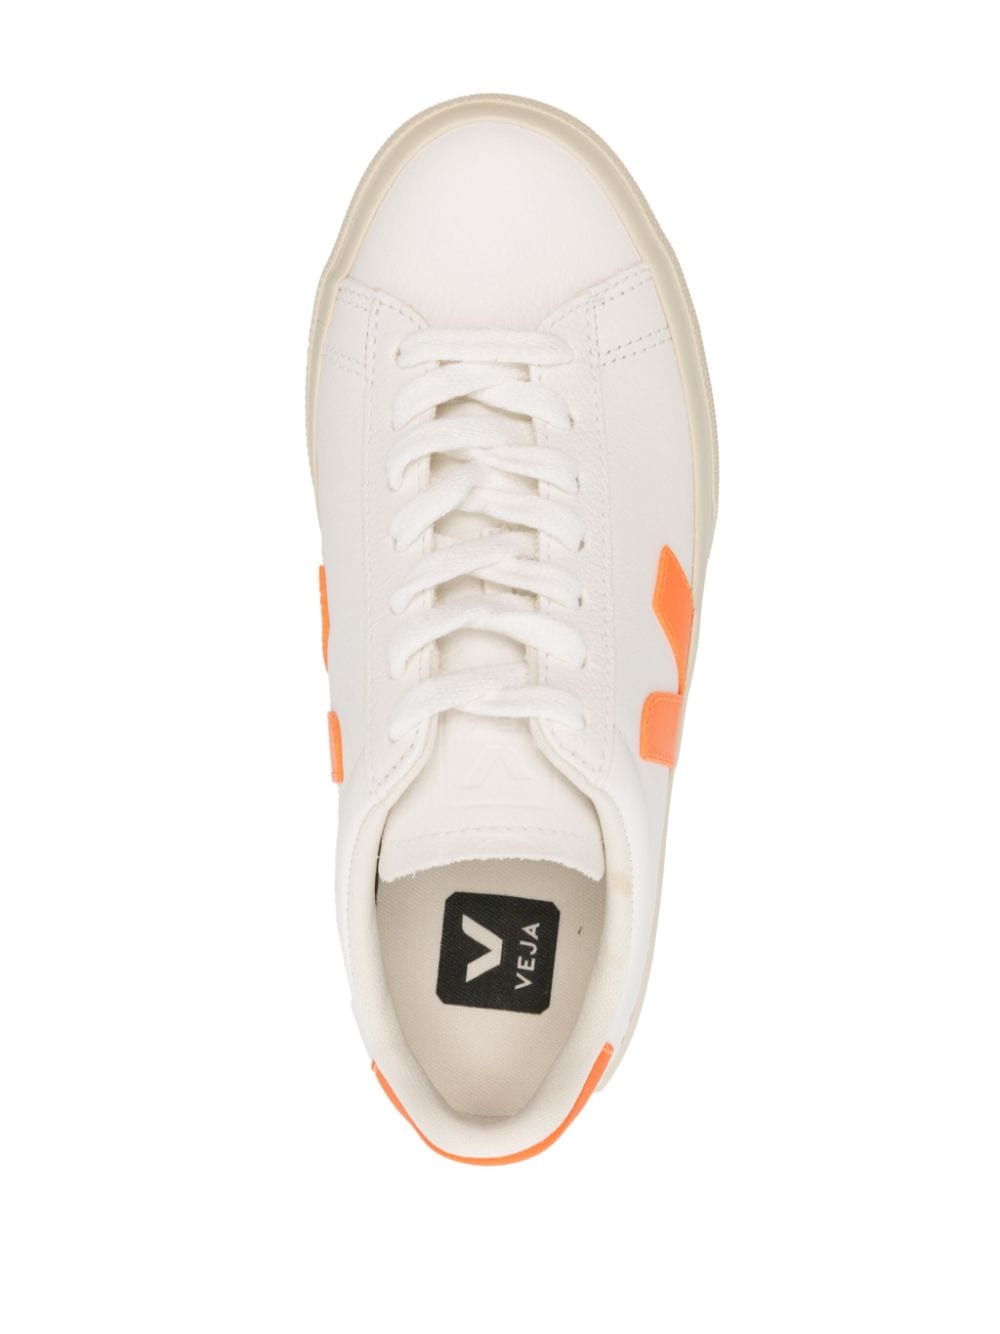 Orange Campo low-top sneakers<BR/><BR/><BR/>